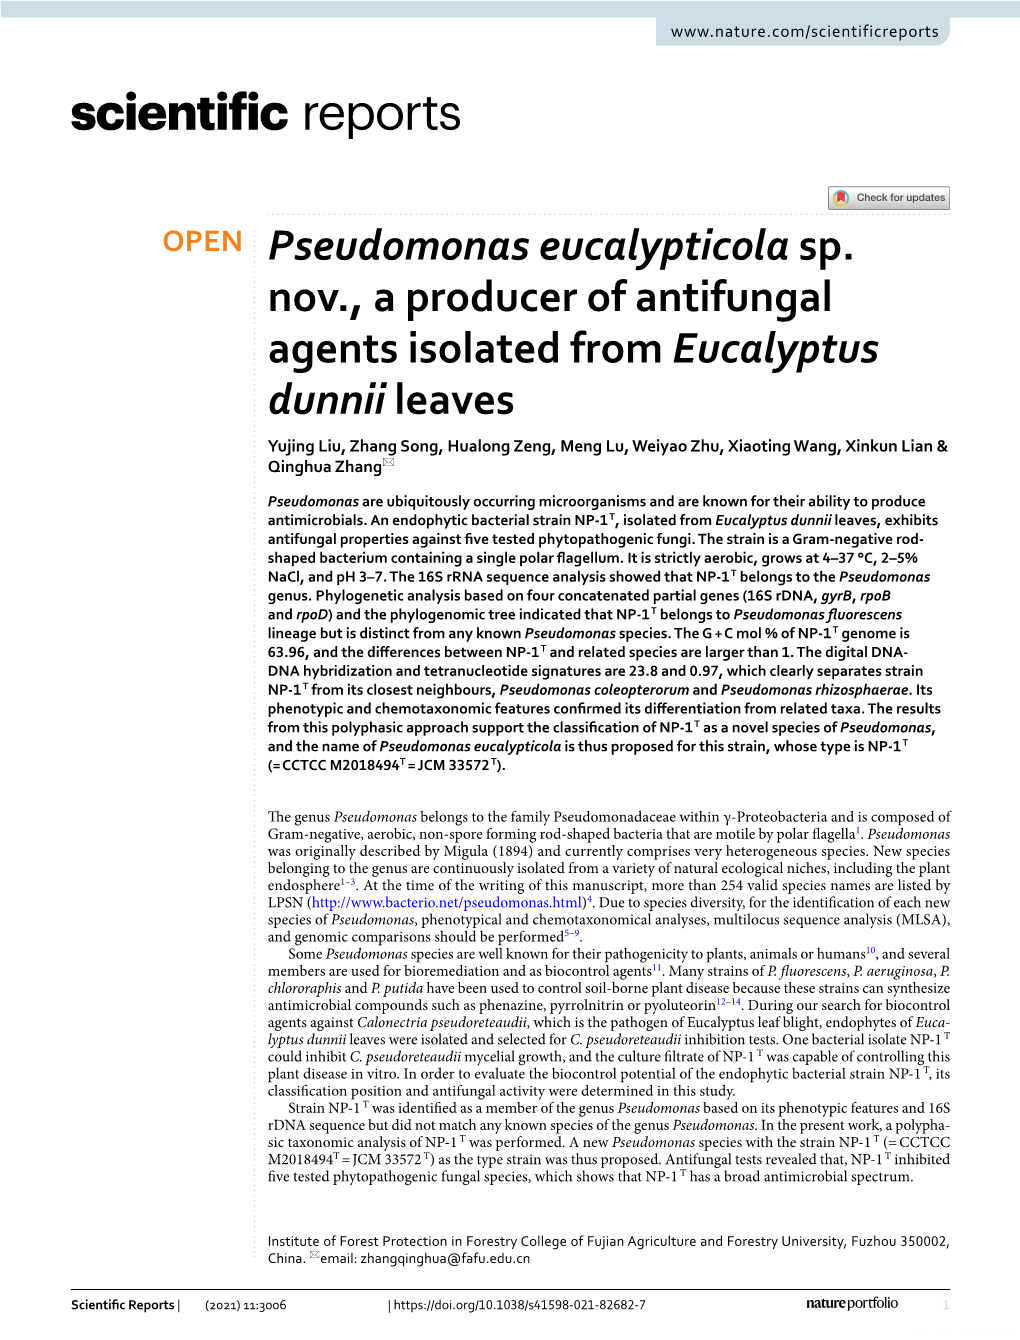 Pseudomonas Eucalypticola Sp. Nov., a Producer of Antifungal Agents Isolated from Eucalyptus Dunnii Leaves